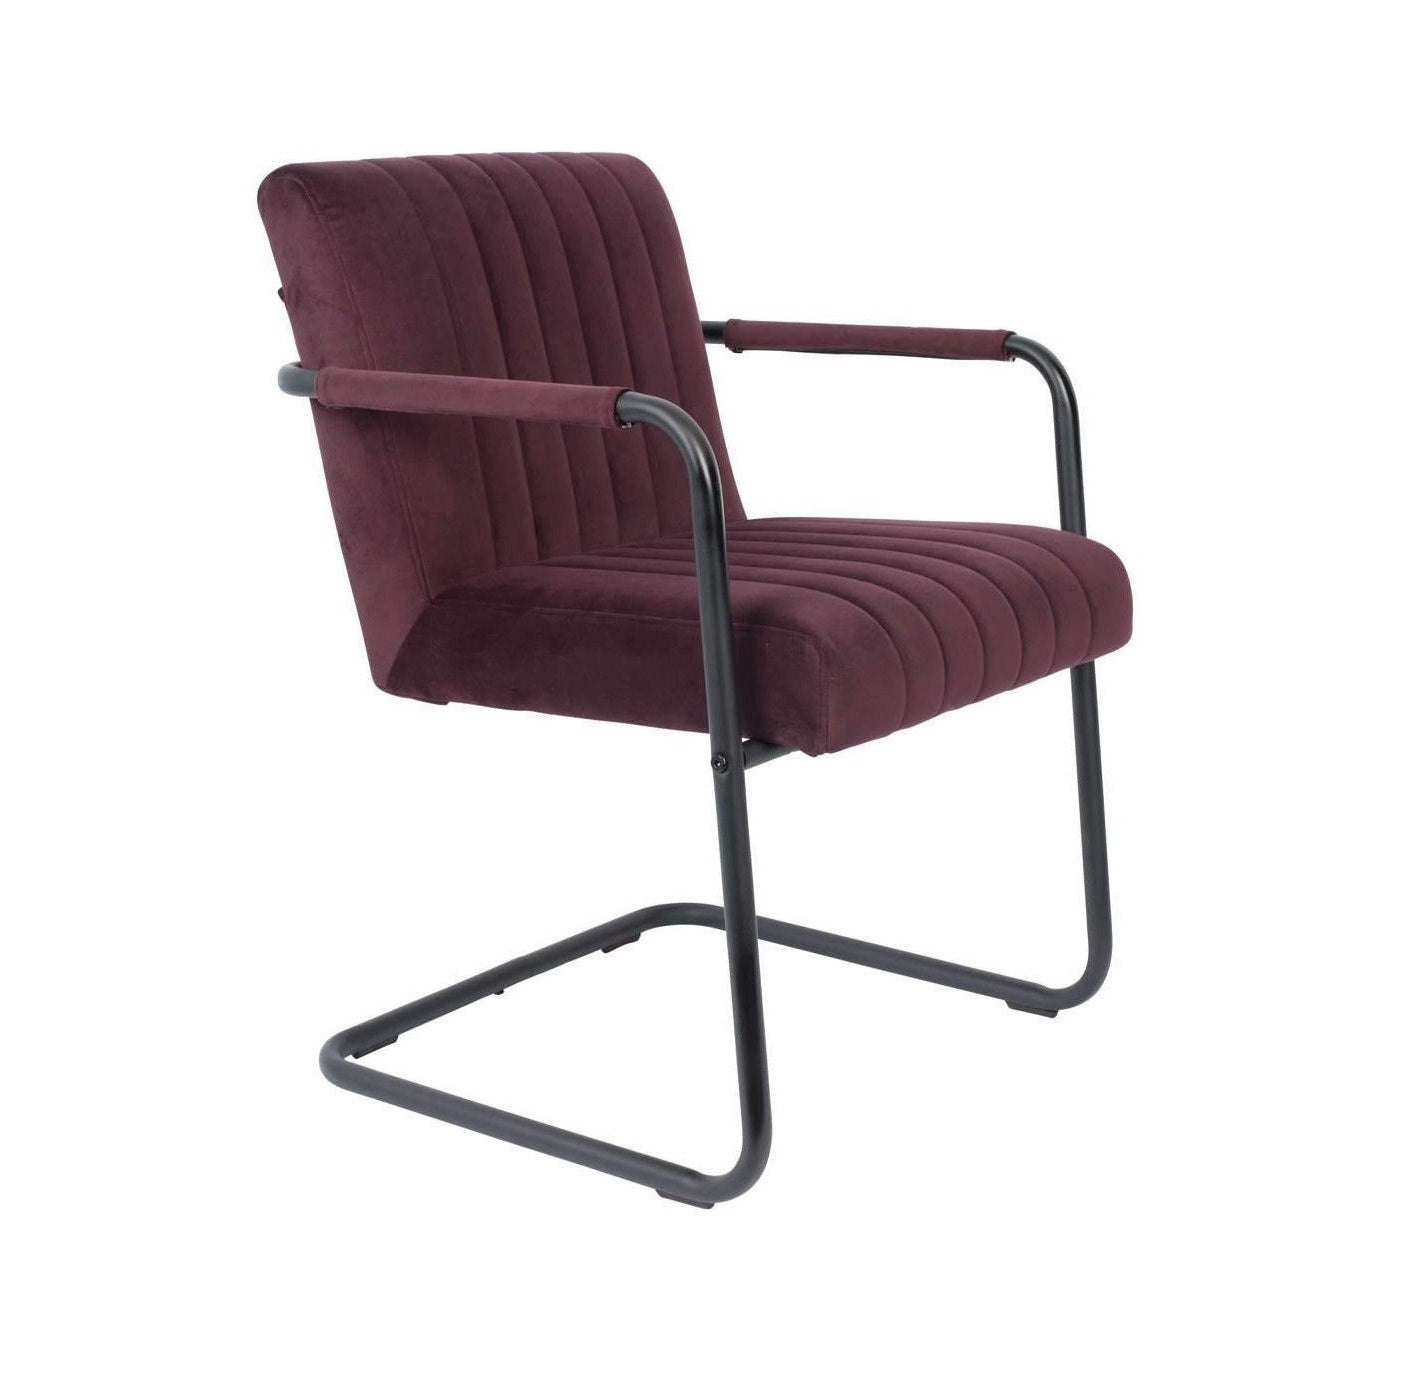 STITCHED VELVET purple armchair, Dutchbone, Eye on Design